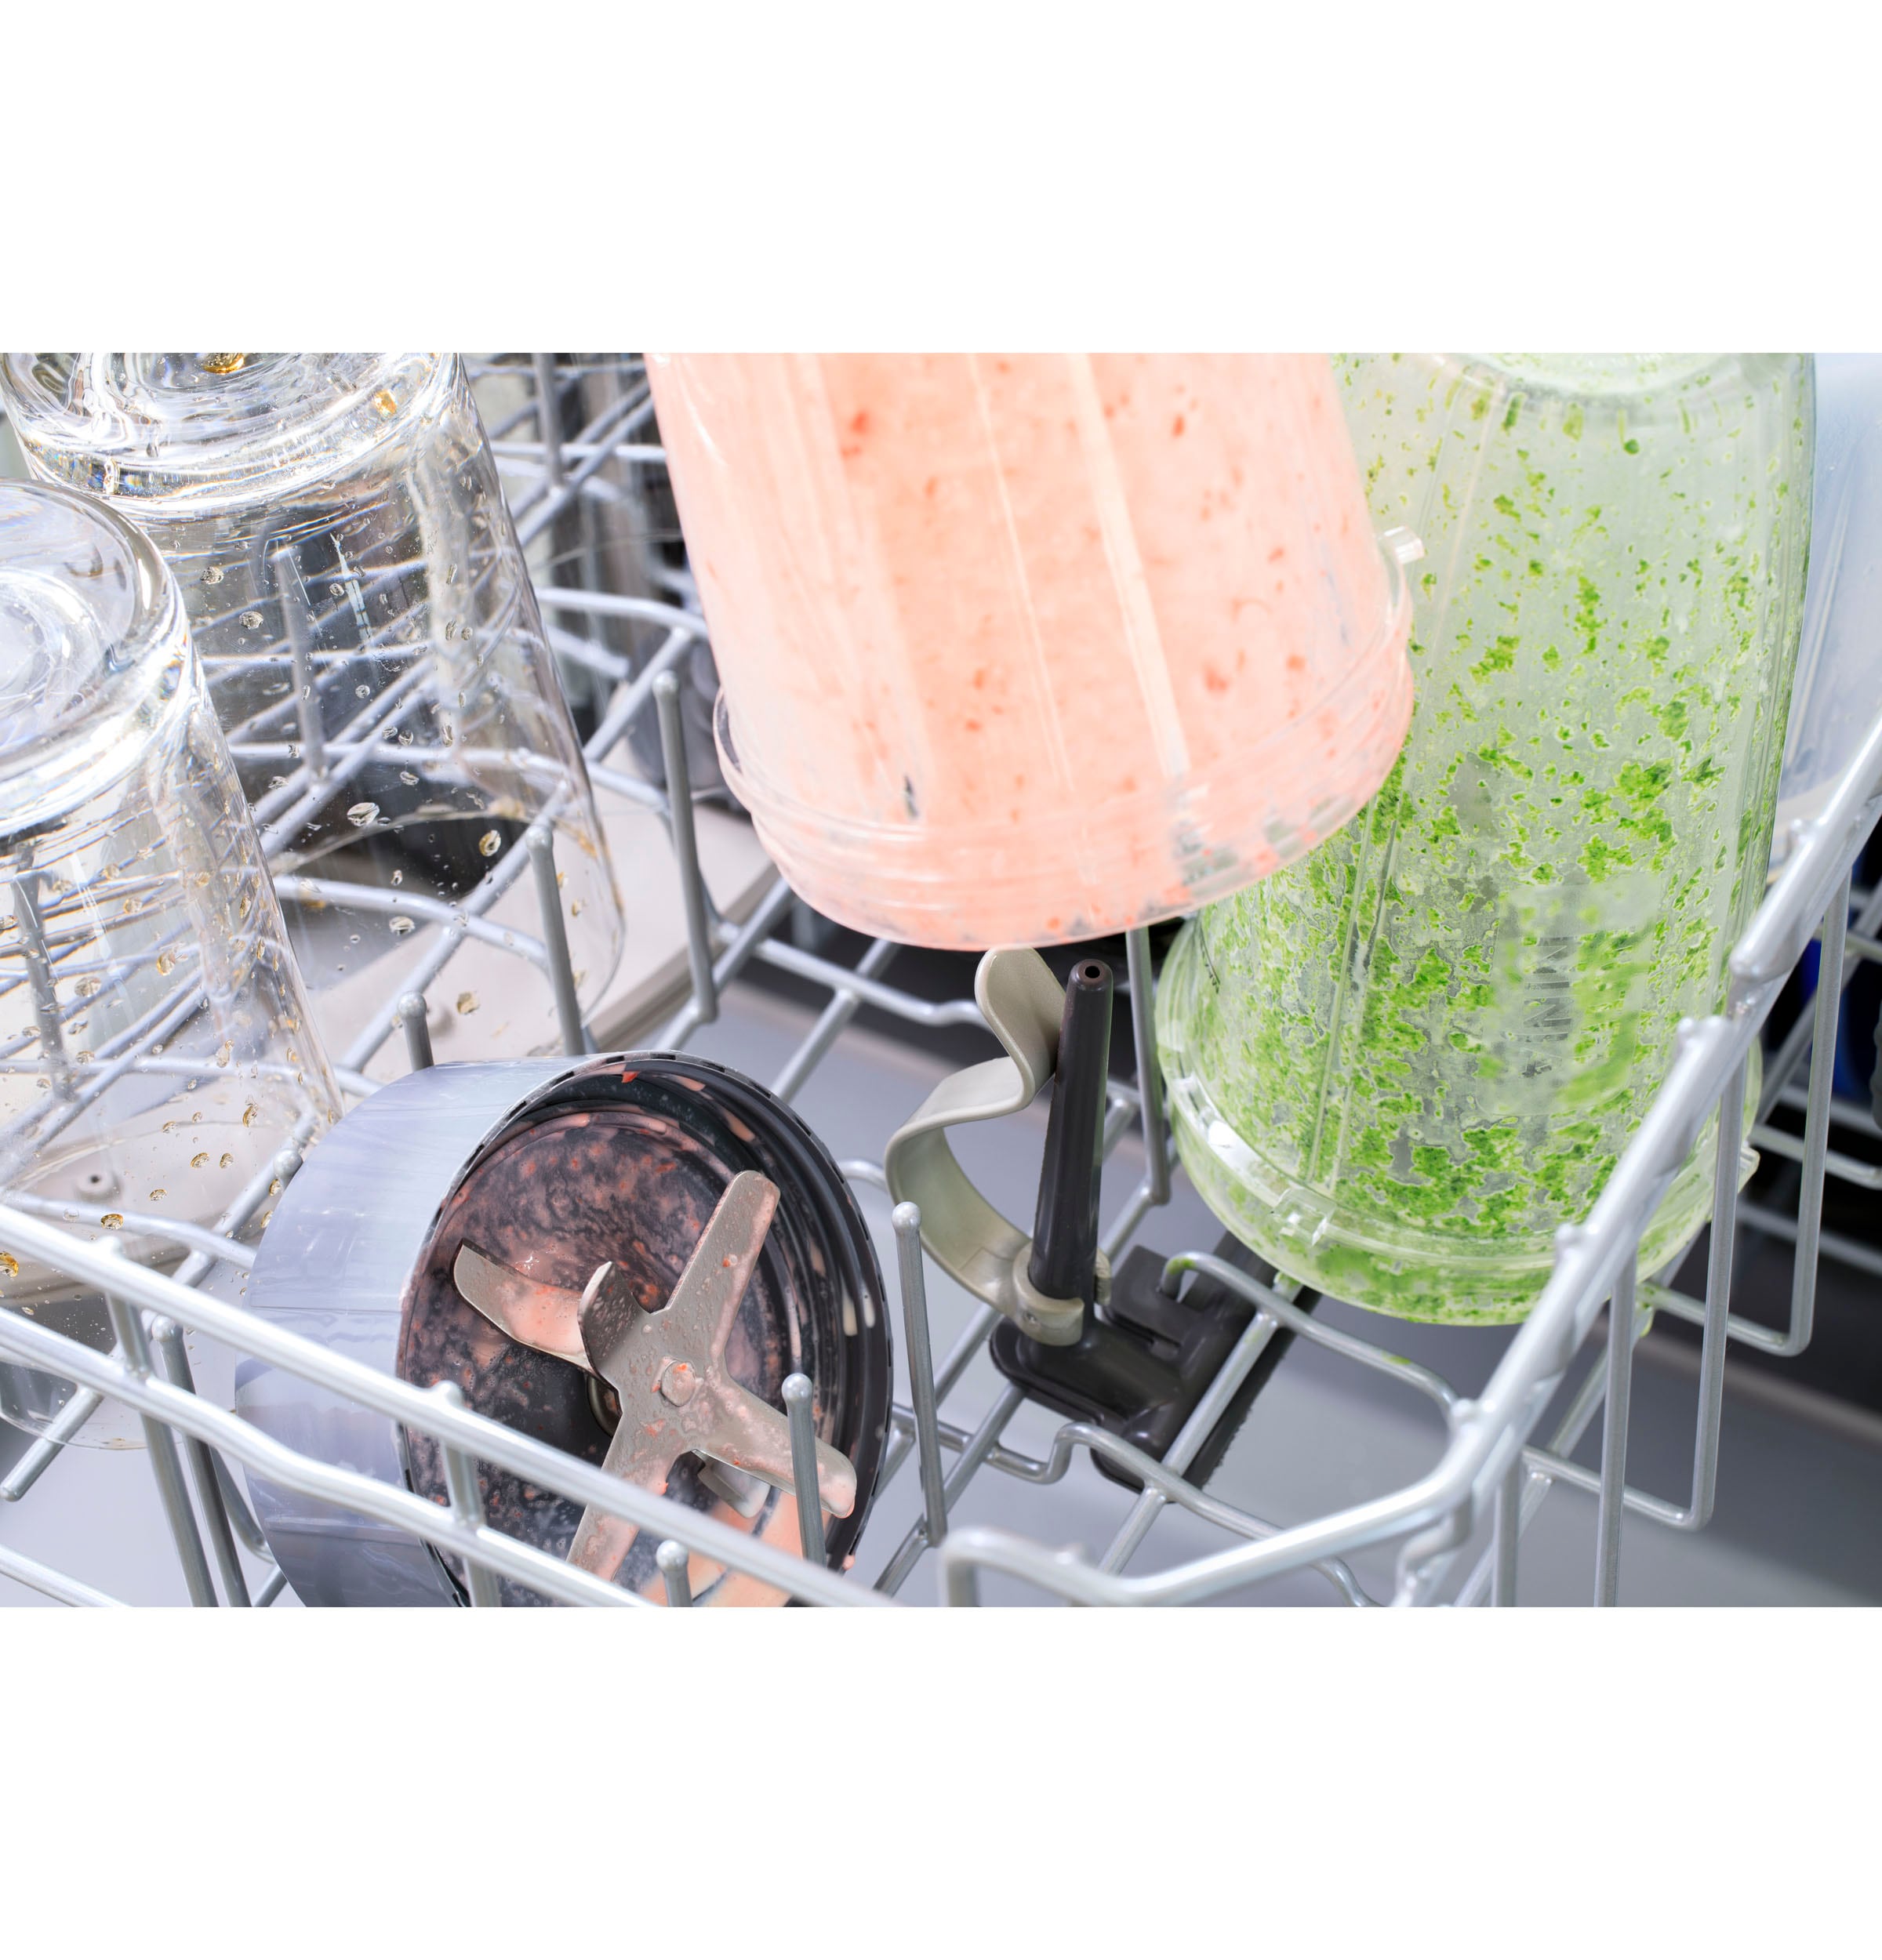 Dishwashers GE® Stainless Steel Interior Dishwasher